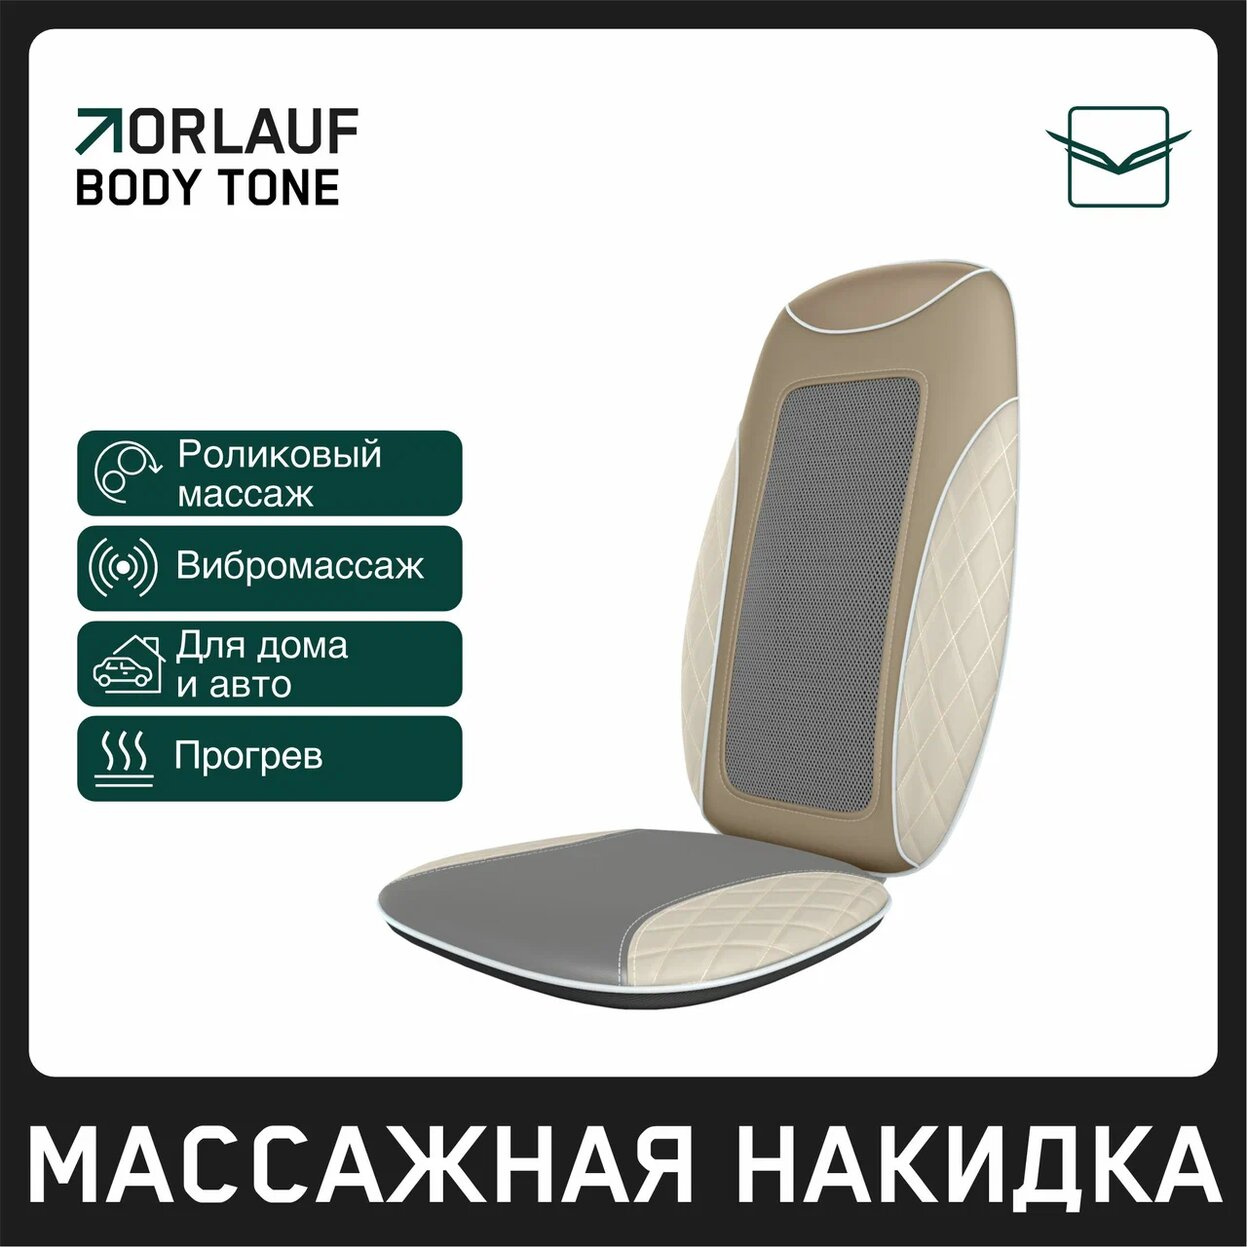 Orlauf Body Tone из каталога устройств для массажа в Казани по цене 15400 ₽